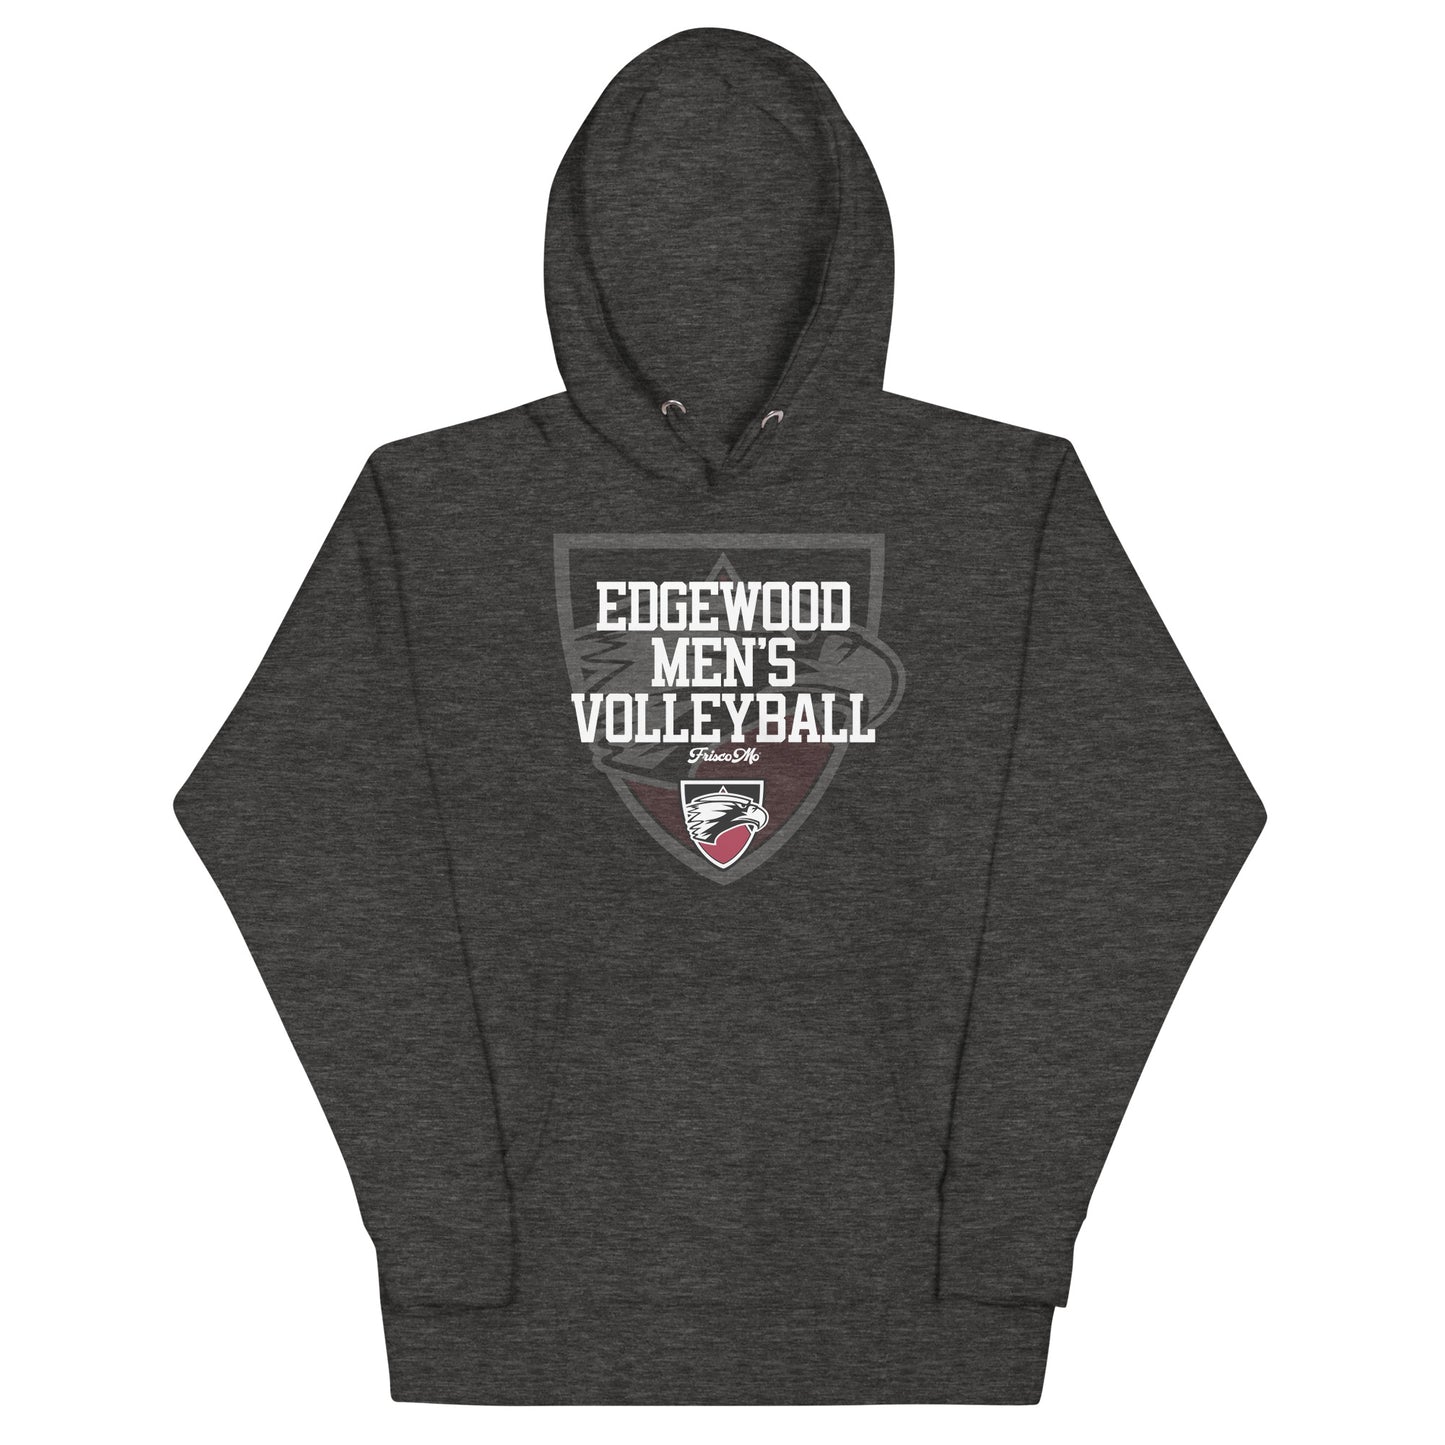 Edgewood Men's Volleyball Hoodie